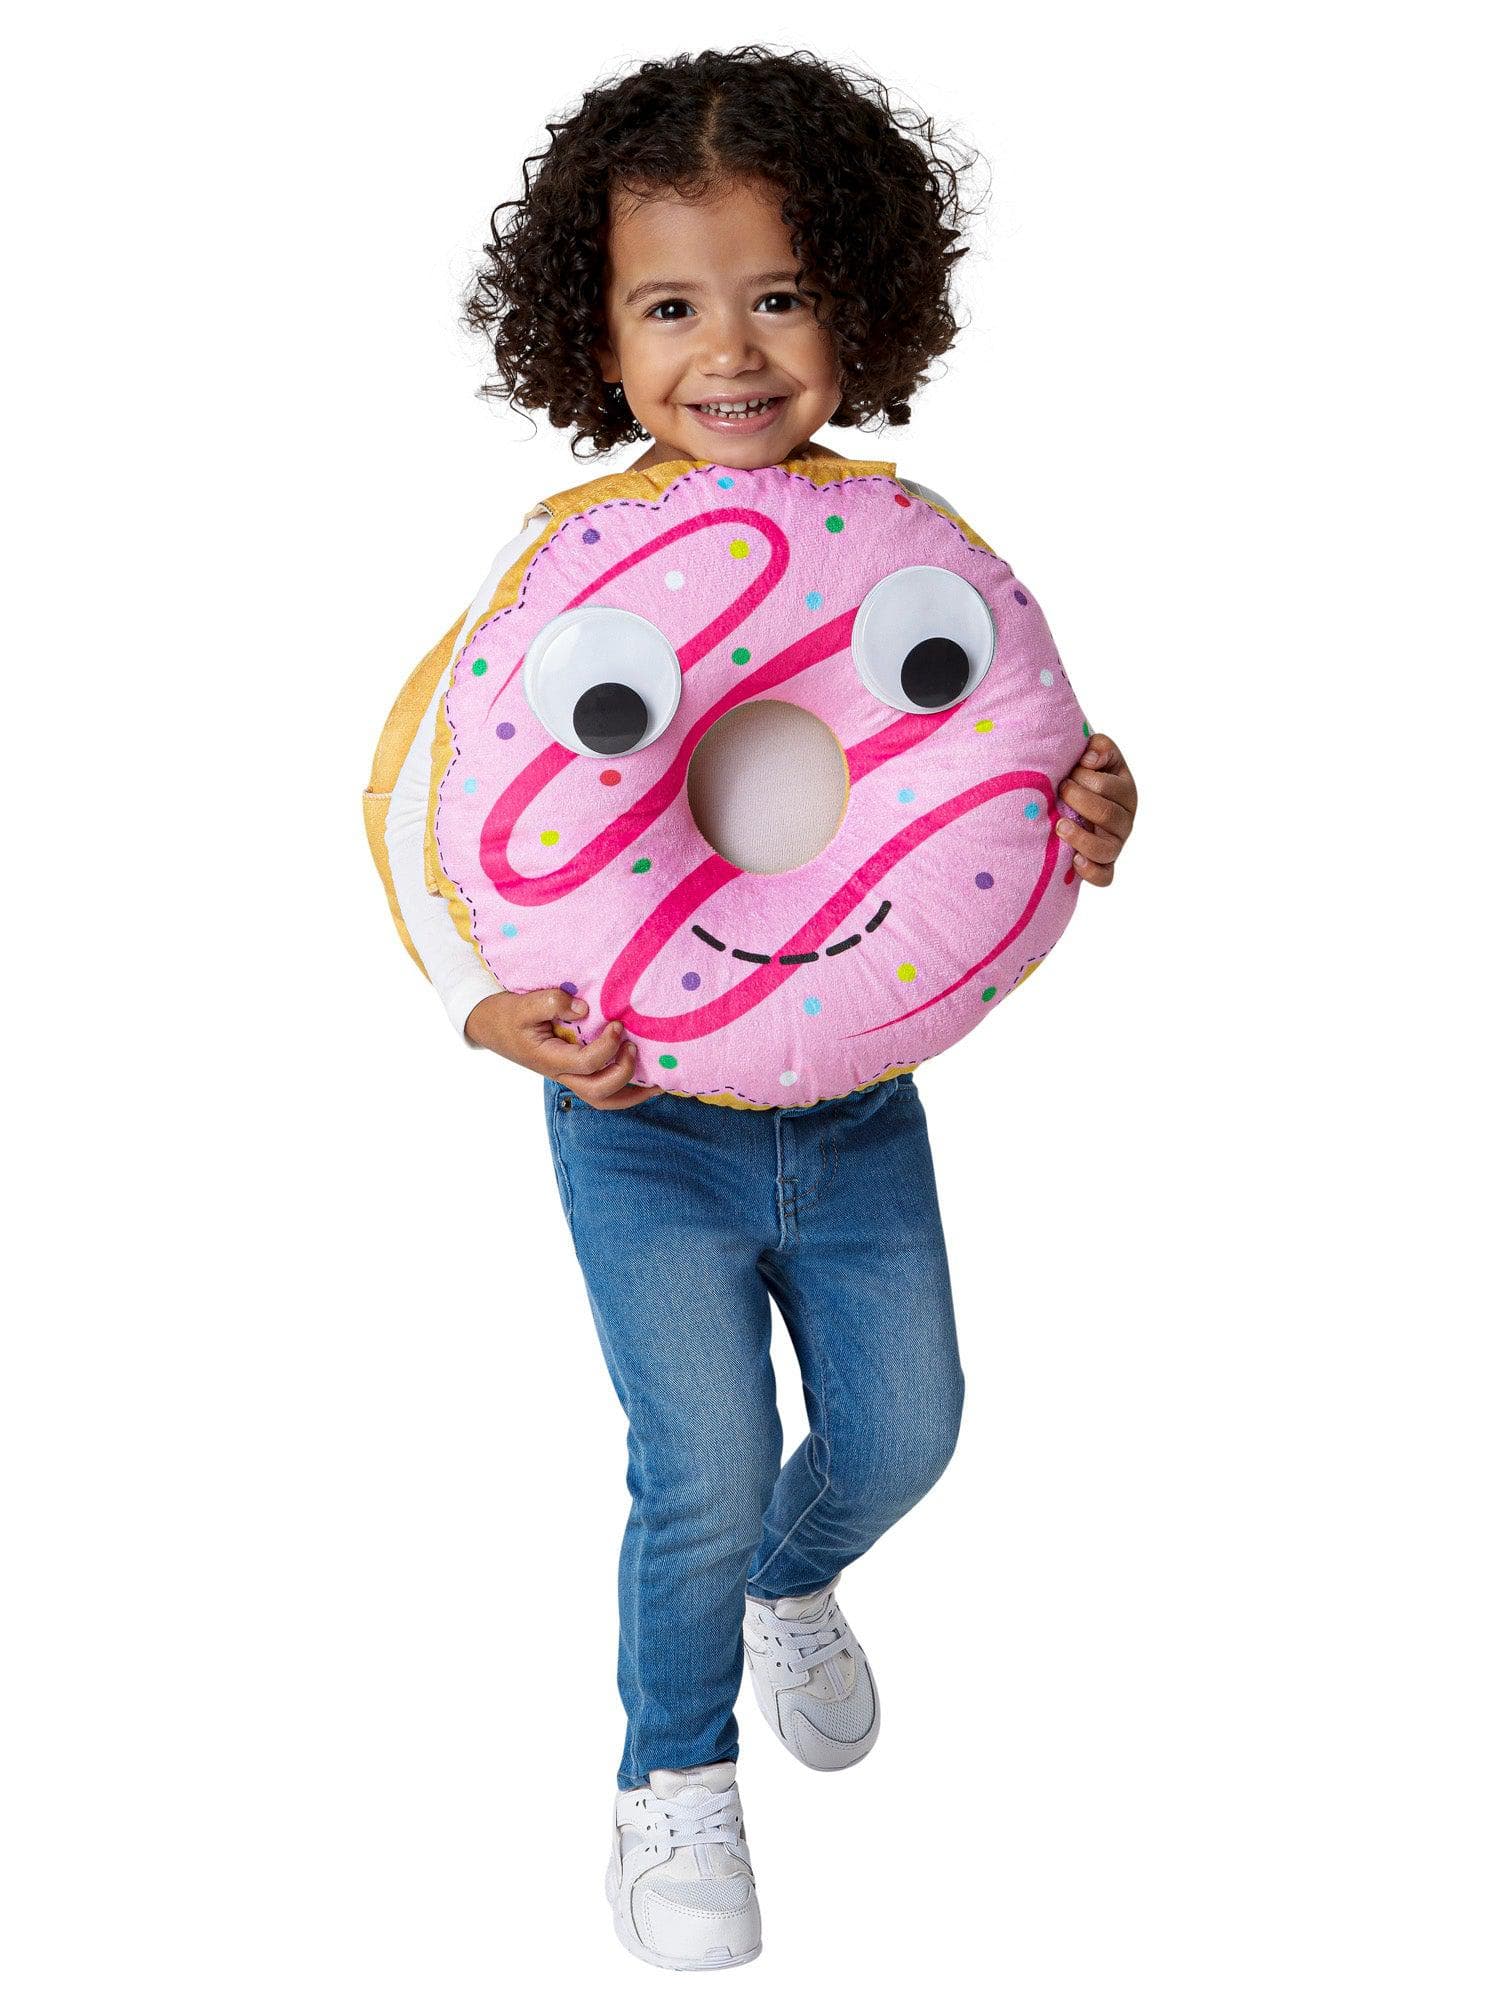 Yummy World Pink Donut Kids Costume by Kidrobot - costumes.com